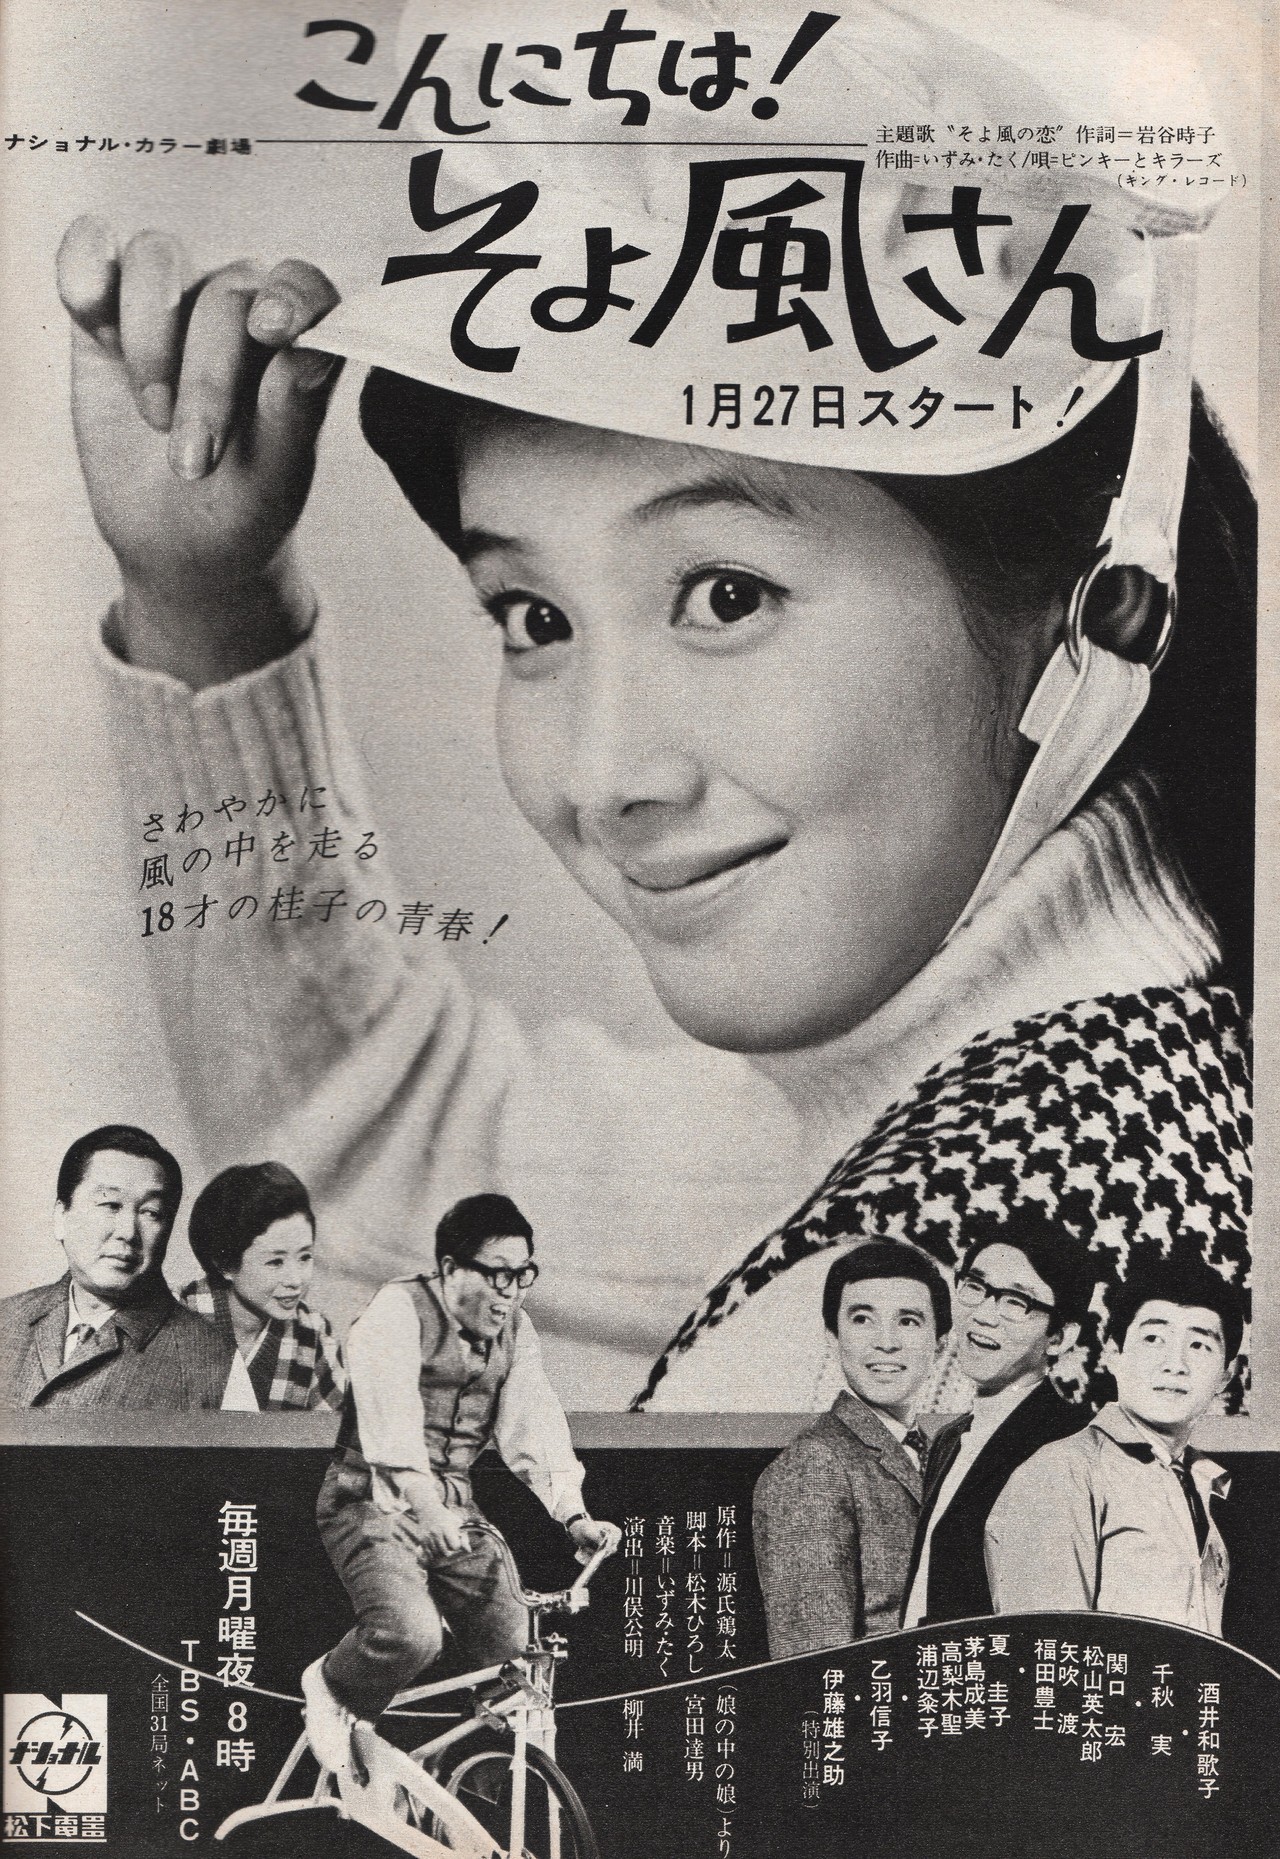 Tsun-Zaku＜擘＞ — 酒井和歌子「こんにちは! そよ風さん」：広告－1969年